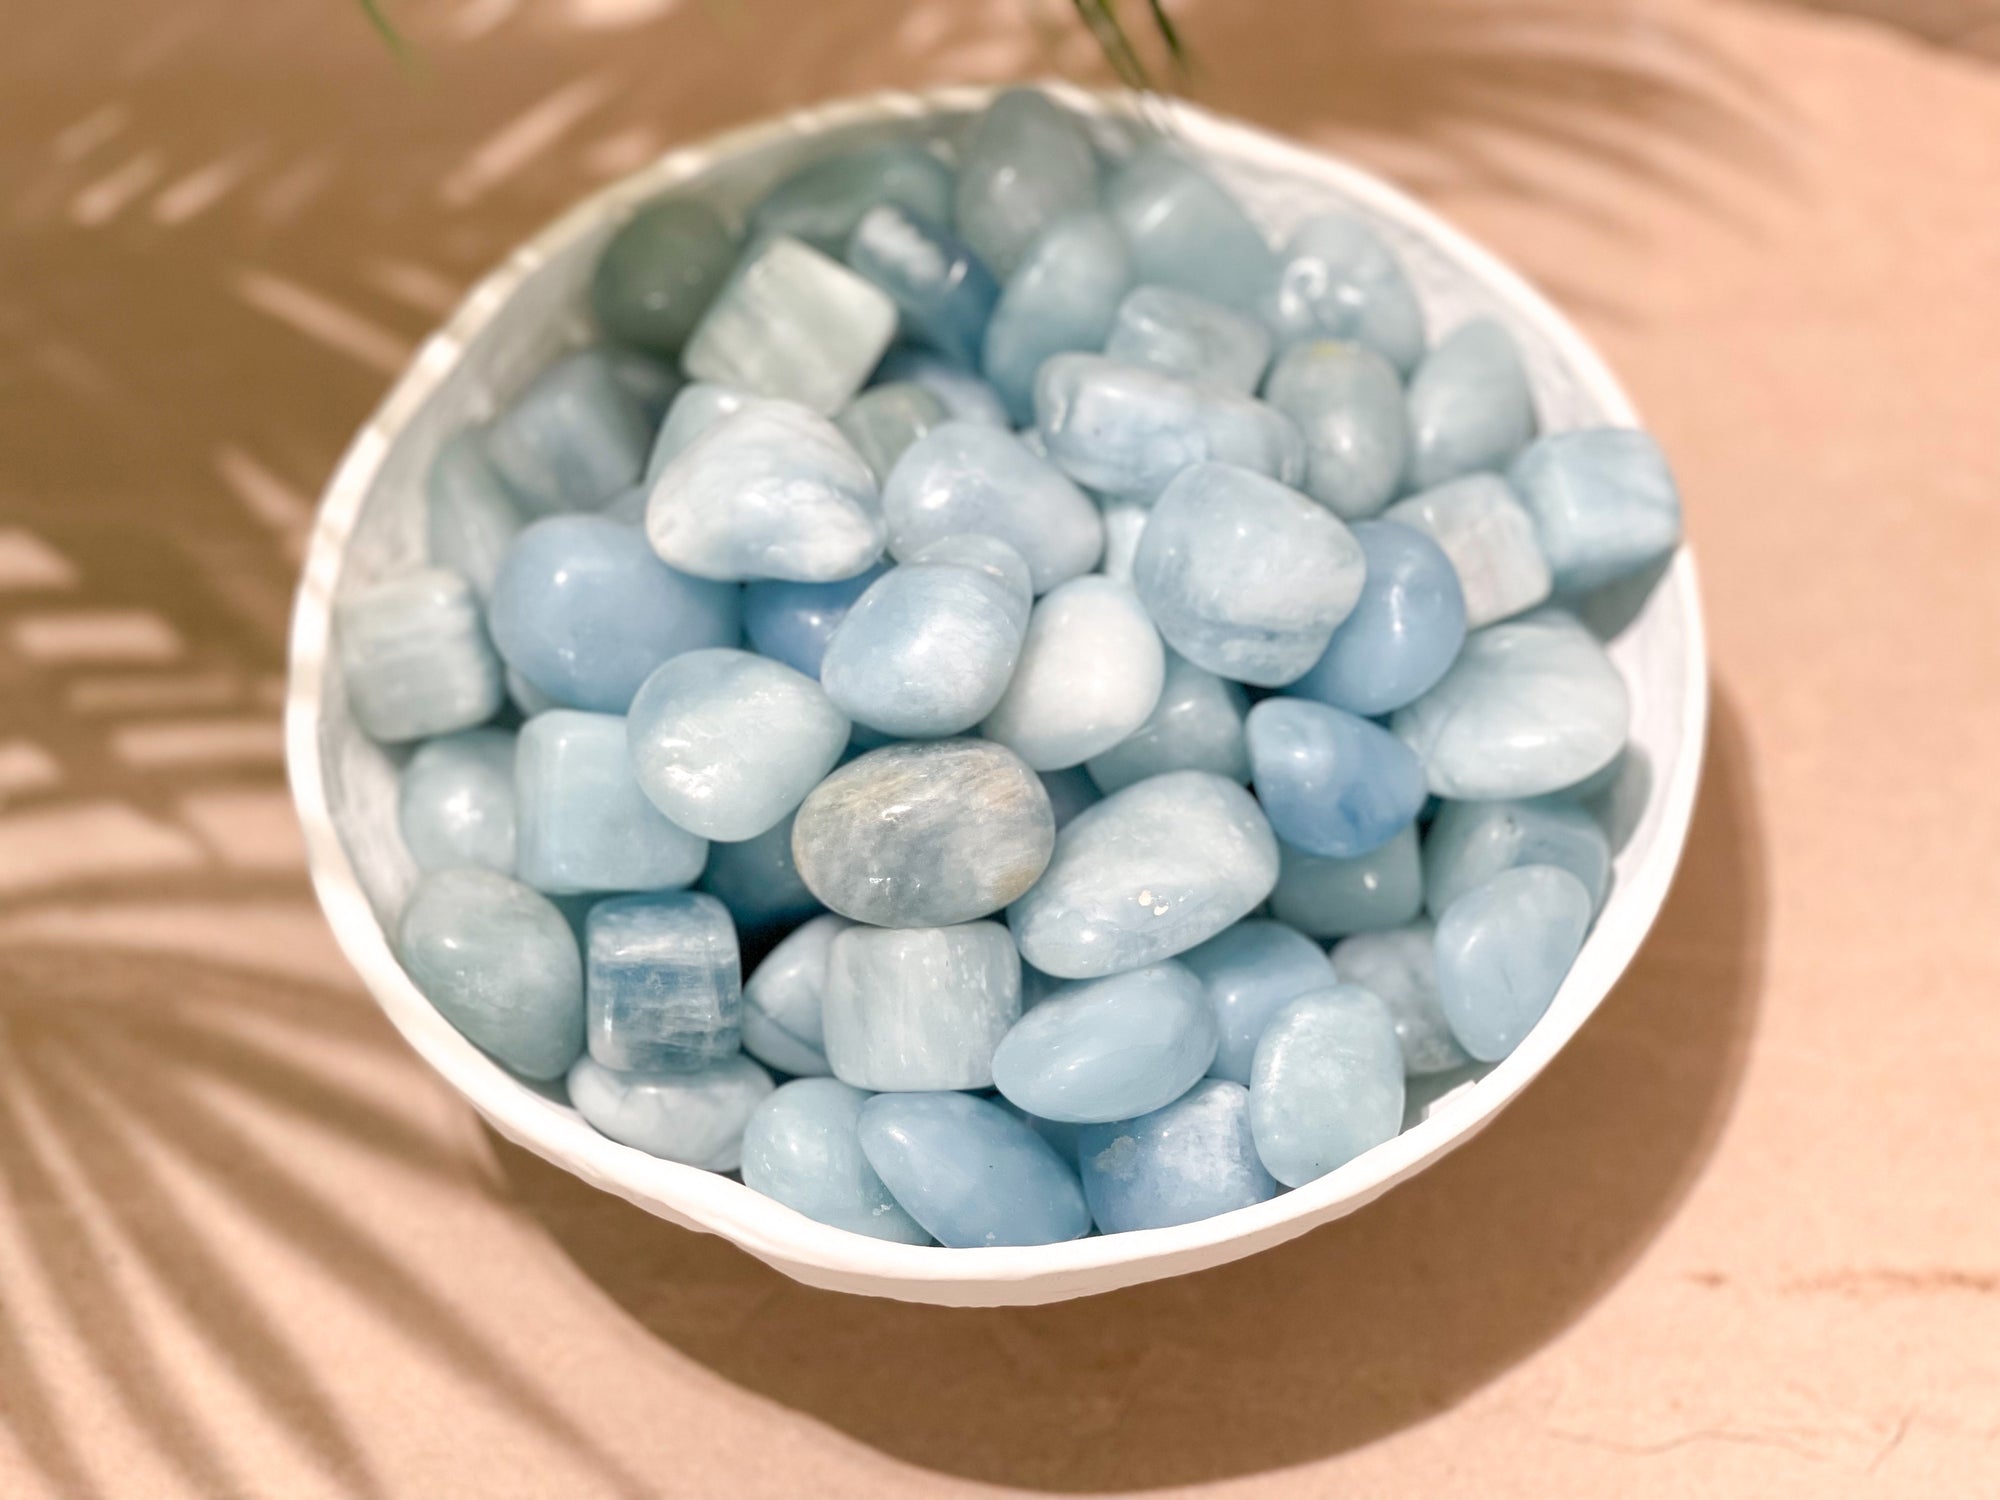 Aquamarine Tumbled Stones: The Serene Beauty and Healing Energies